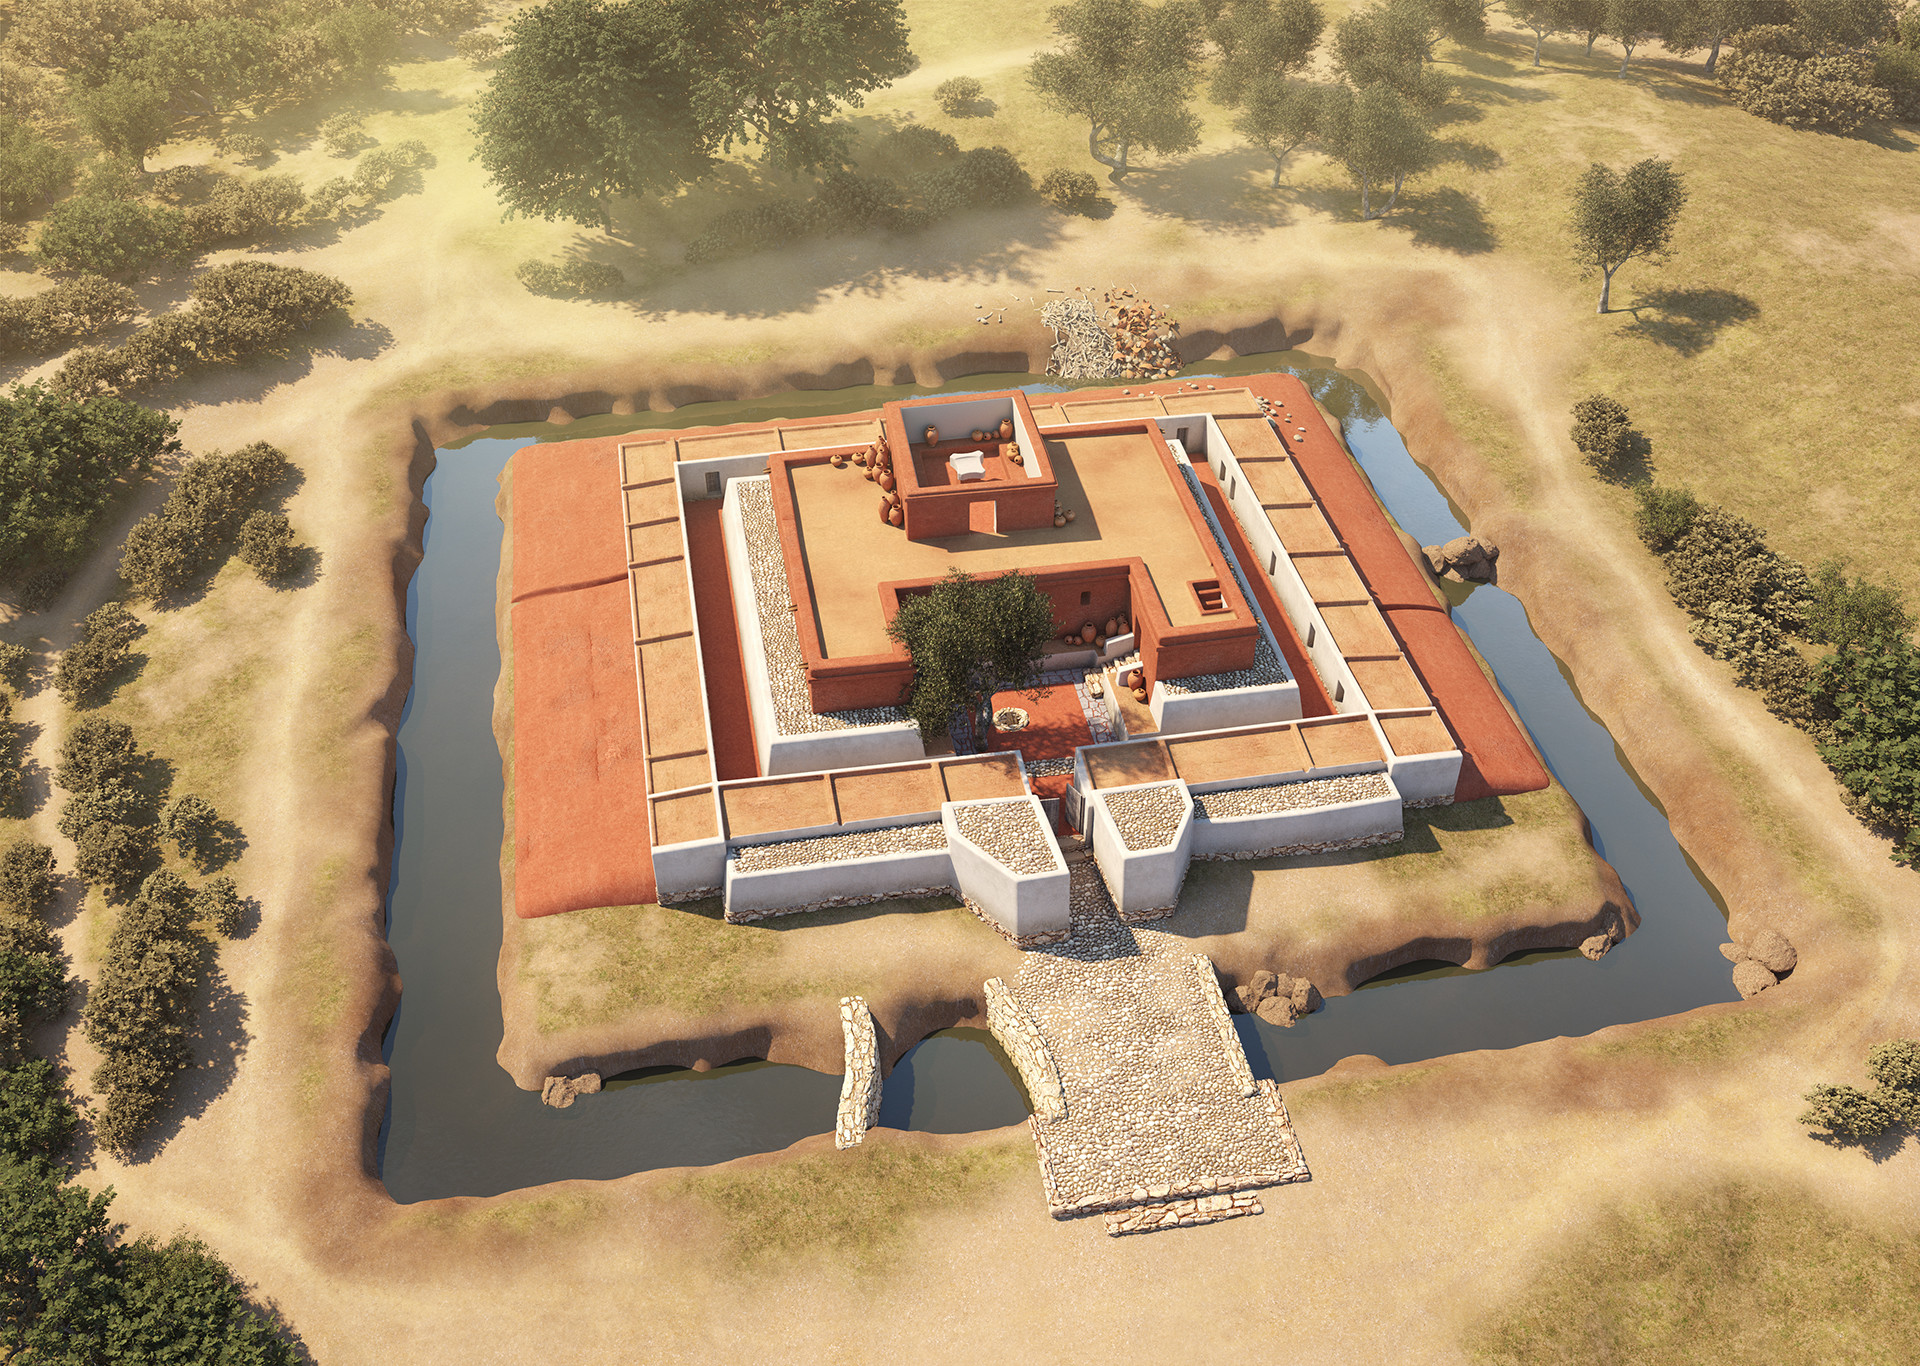 JR.Casals - Roano Field, 4th century BC